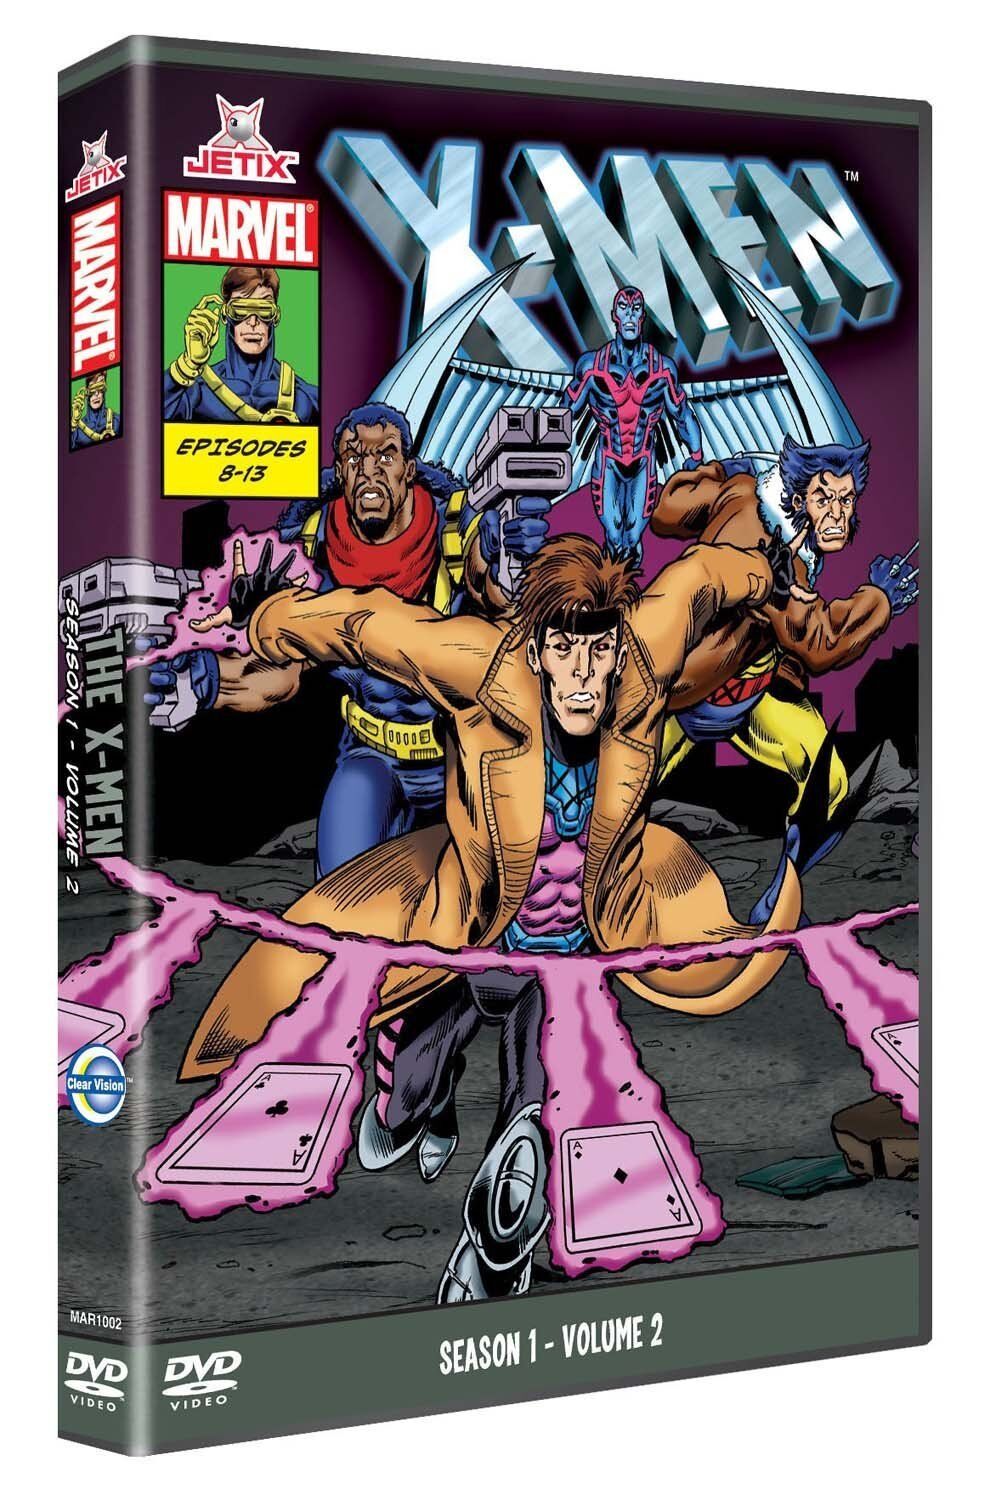 X-Men TAS Season 1 Volume 2 The Animated Series 8-13 UK DVD | eBay